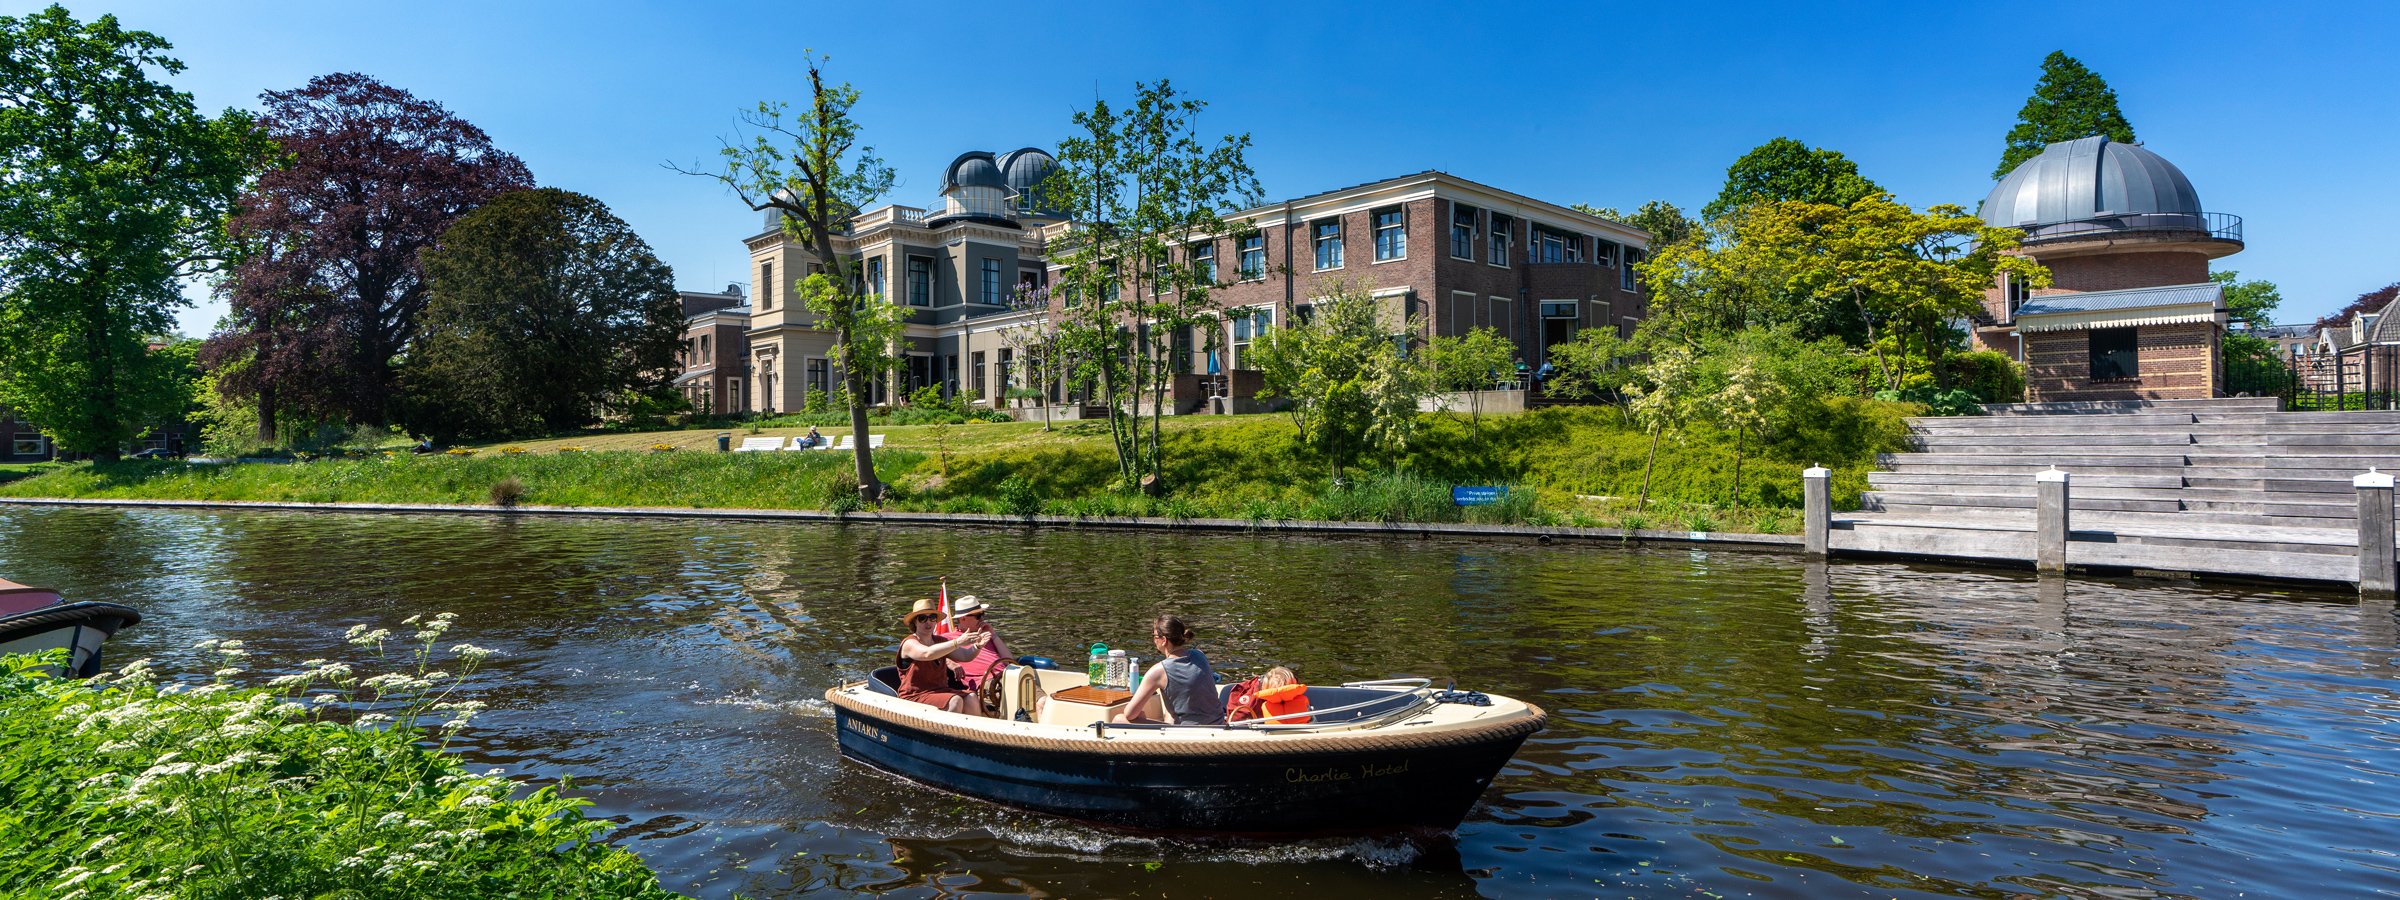 Municipality of Leiden